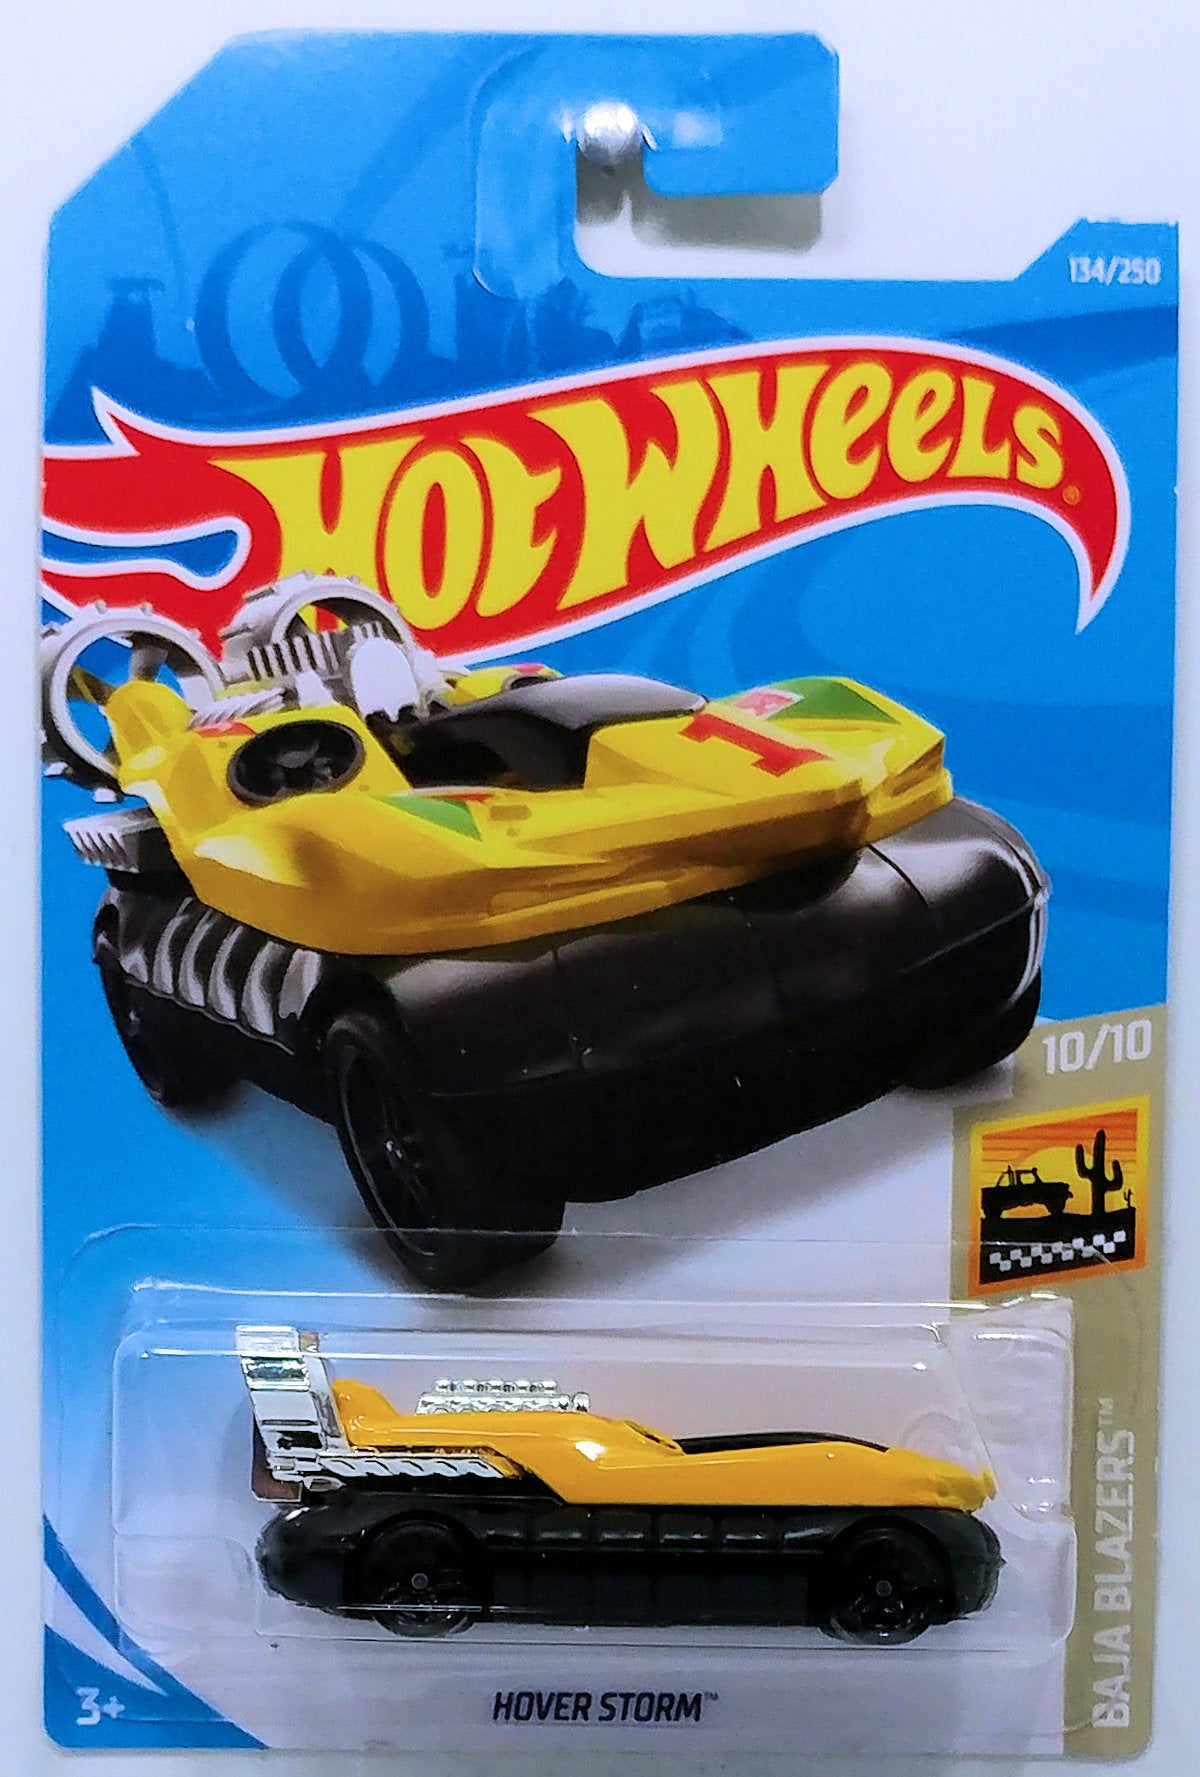 Hot Wheels 2019 - Collector # 134/250 - Baja Blazers 10/10 - Hover Storm - Yellow  - IC